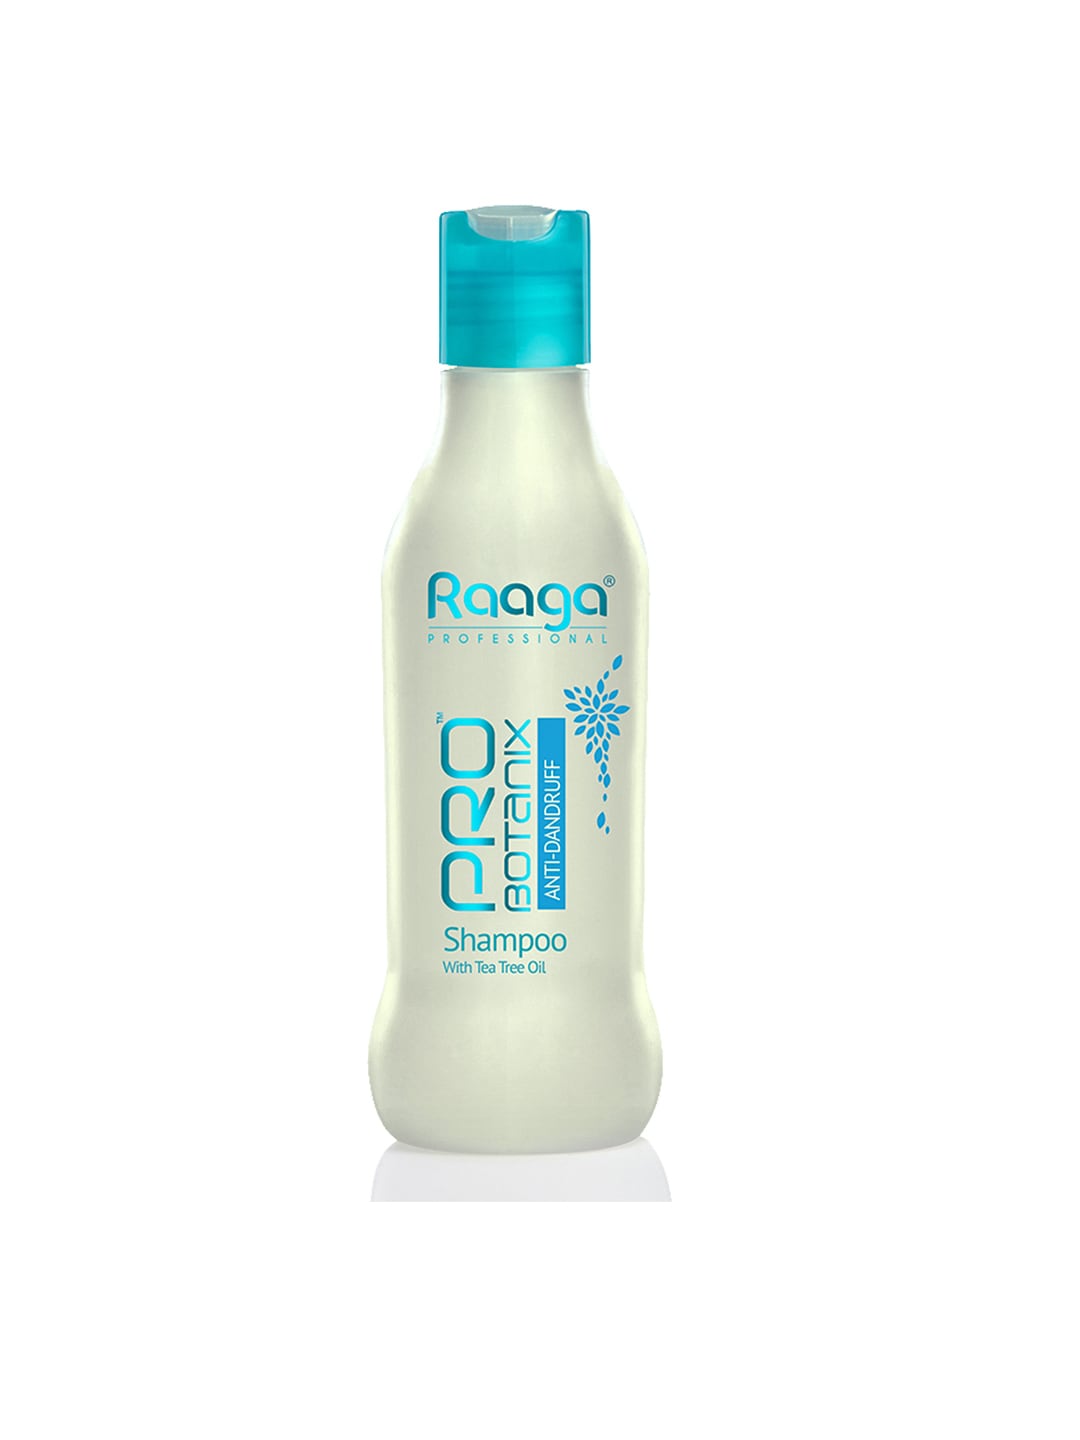 Raaga PROFESSIONAL Pro Botanix Anti-Dandruff Shampoo with Tea Tree Oil 200 ml Price in India